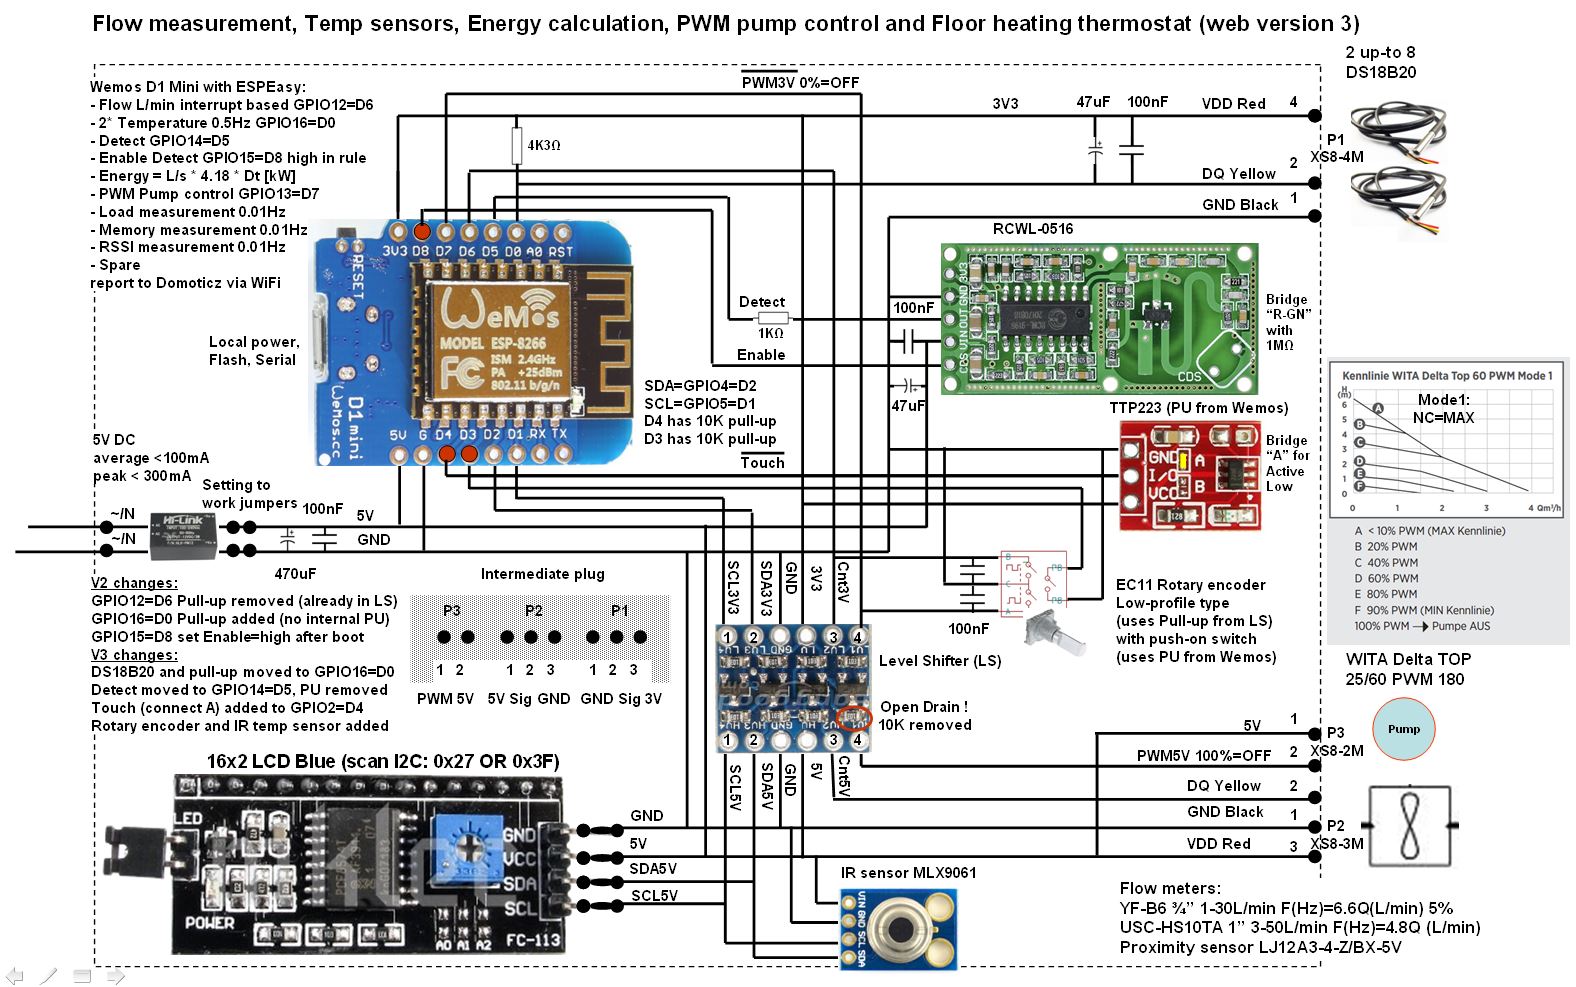 Flow measurement, Temp sensors, Energy calculation, PWM pump control and Floor heating thermostat (web version 3).JPG